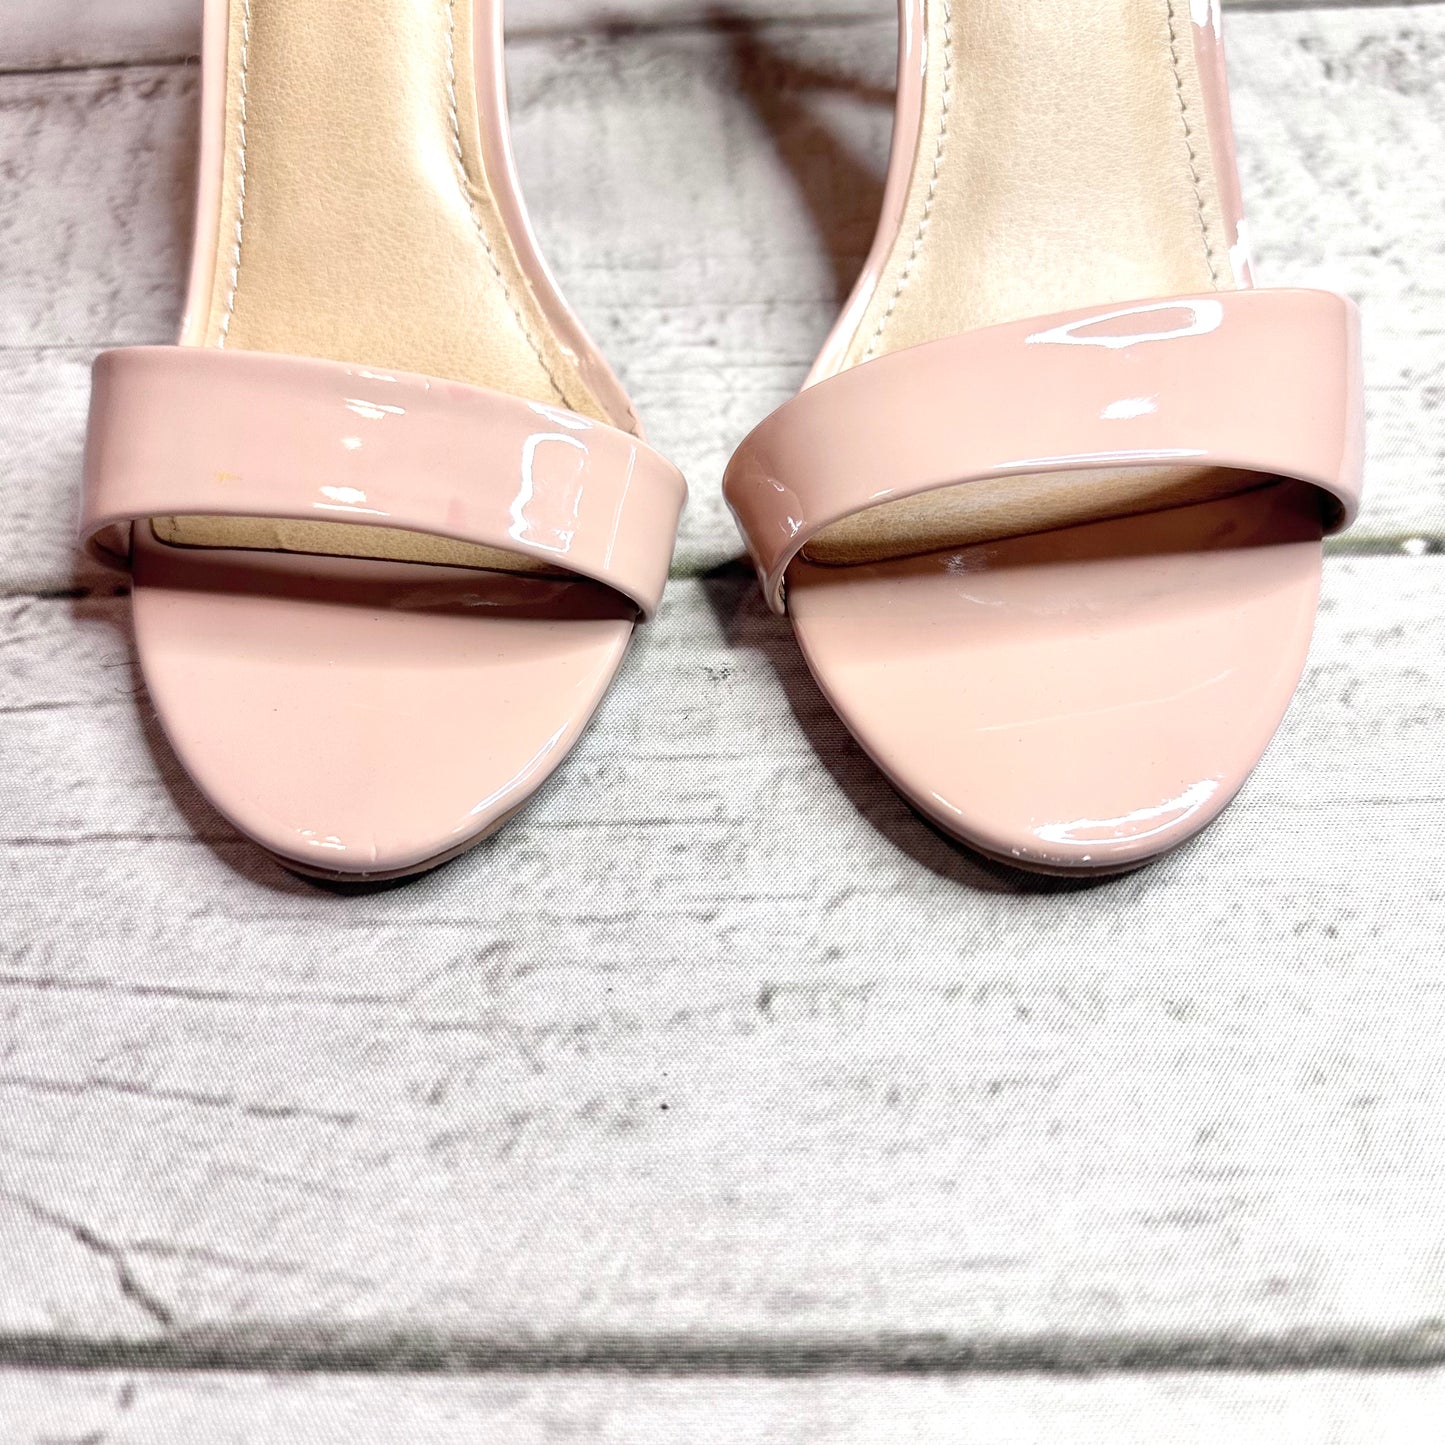 Sandals Heels Stiletto By Steve Madden  Size: 7